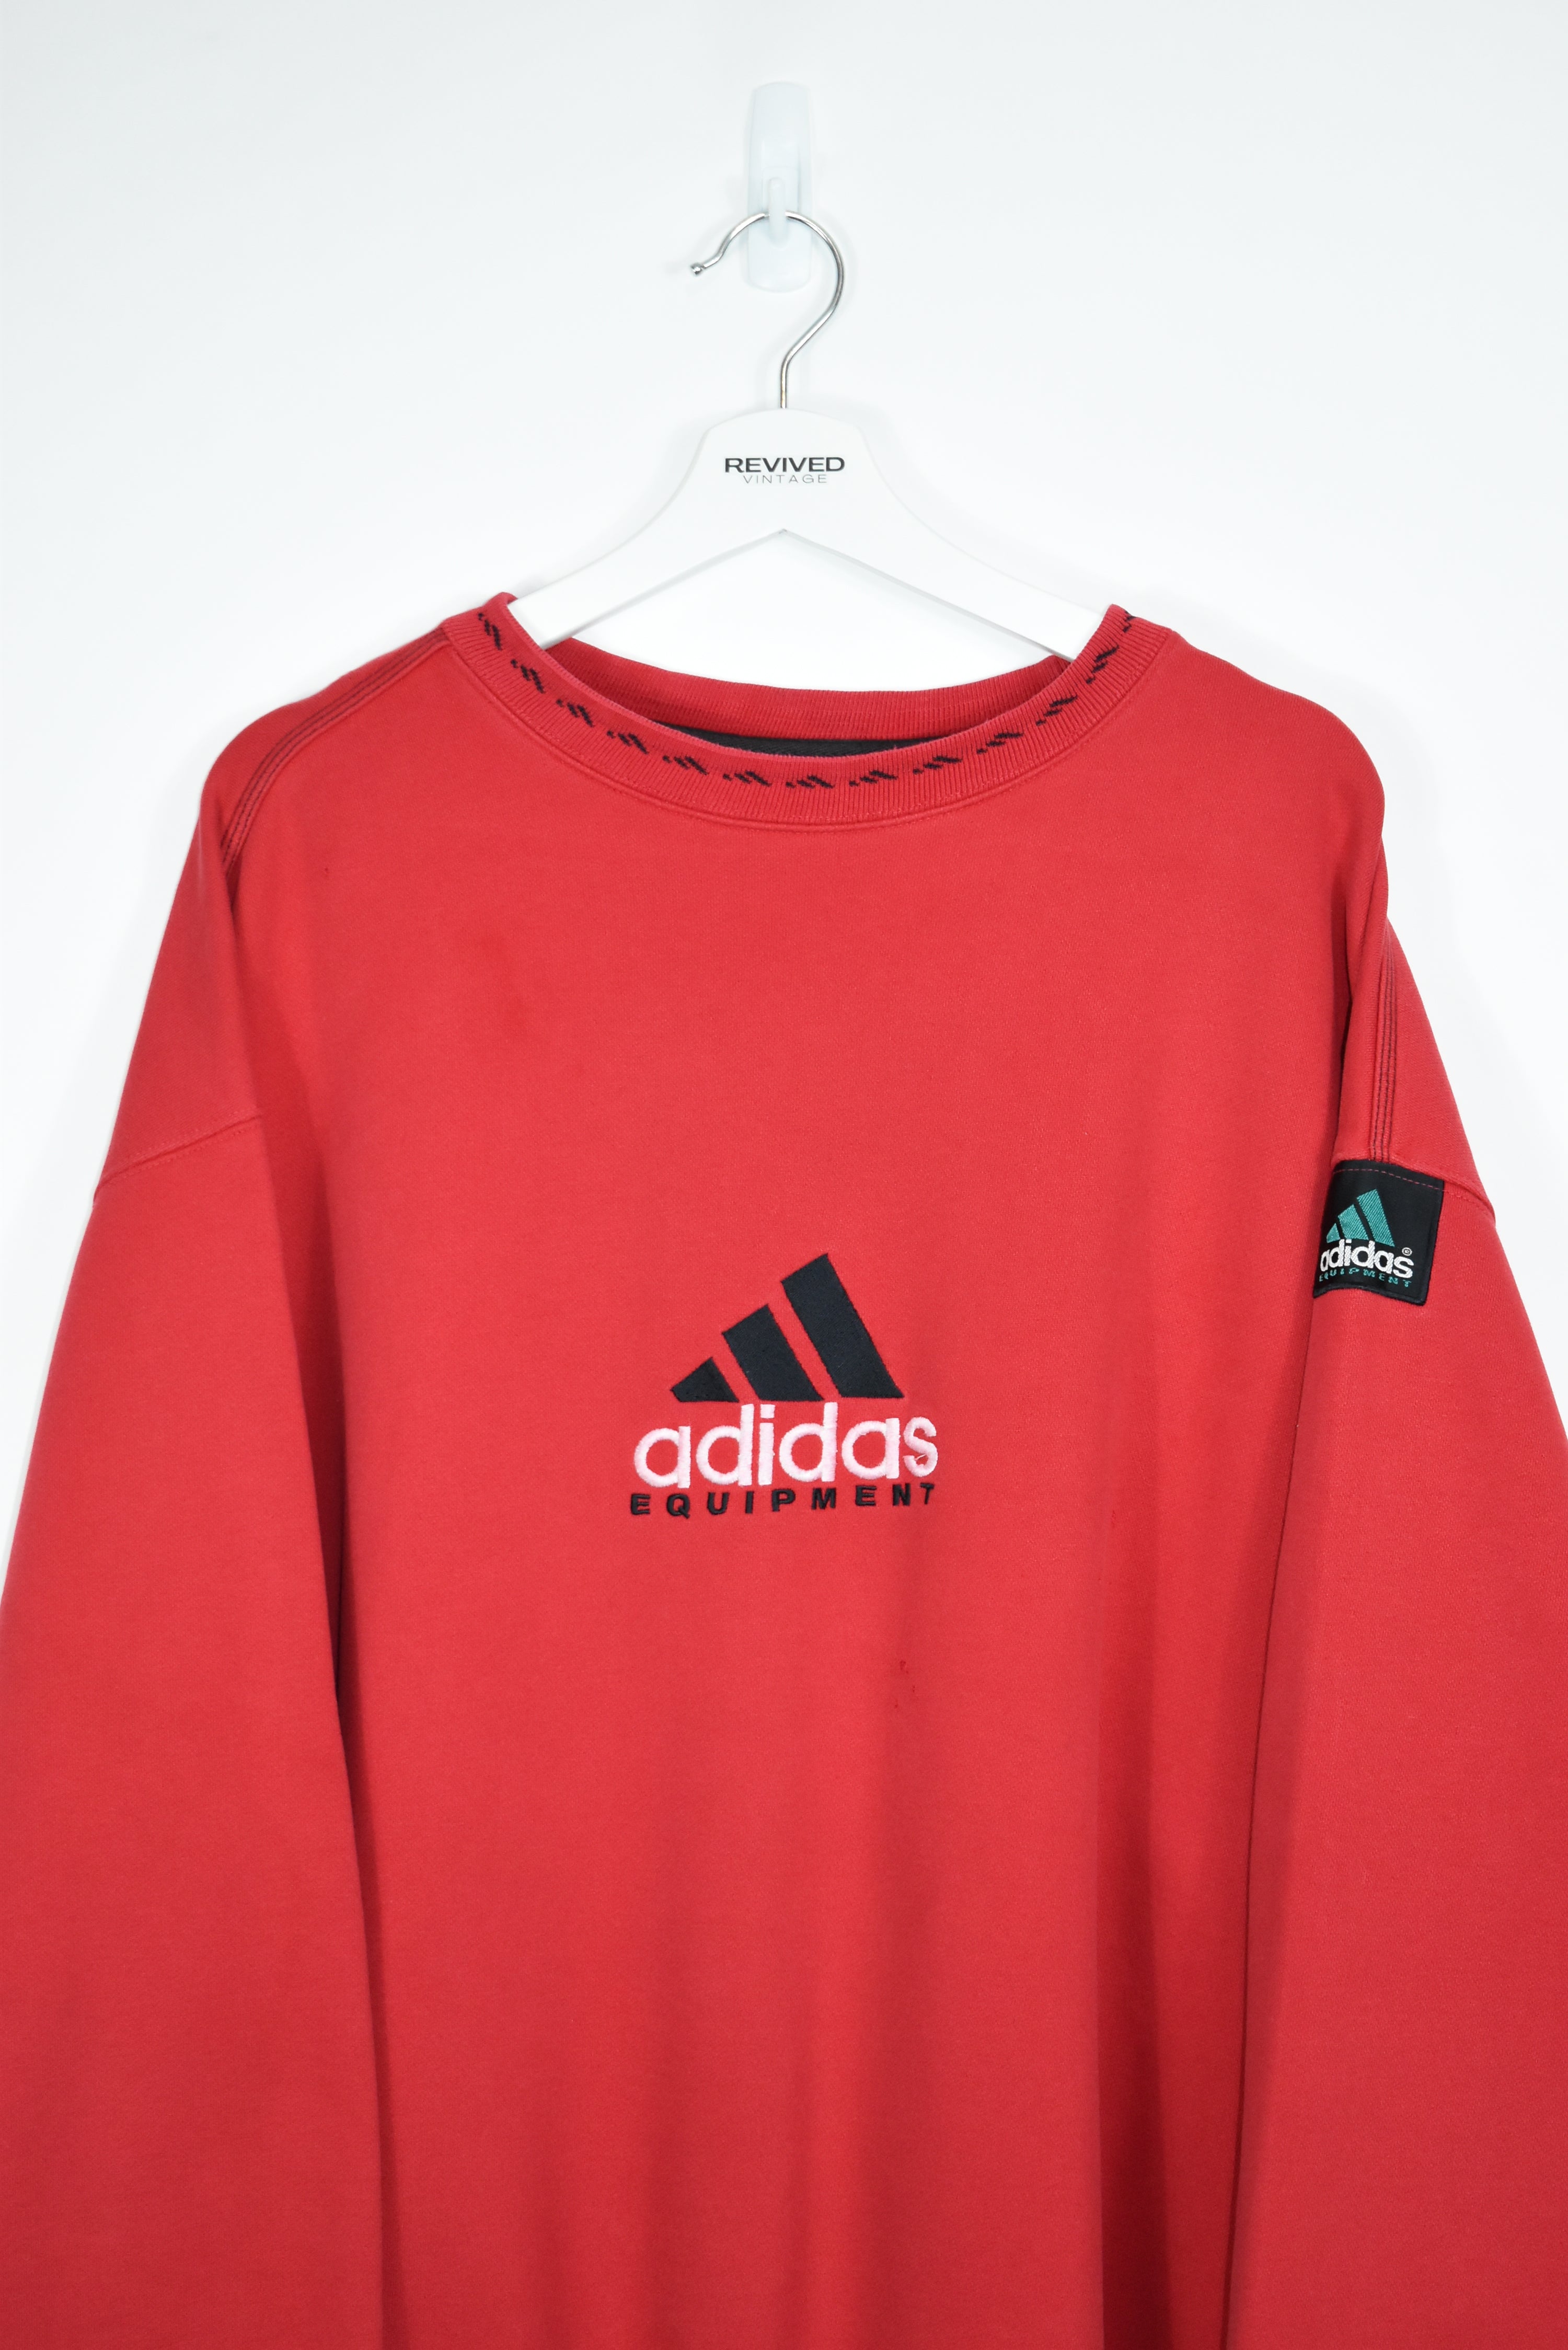 Vintage RARE Adidas Equipment Red Embroidery Sweatshirt XXL